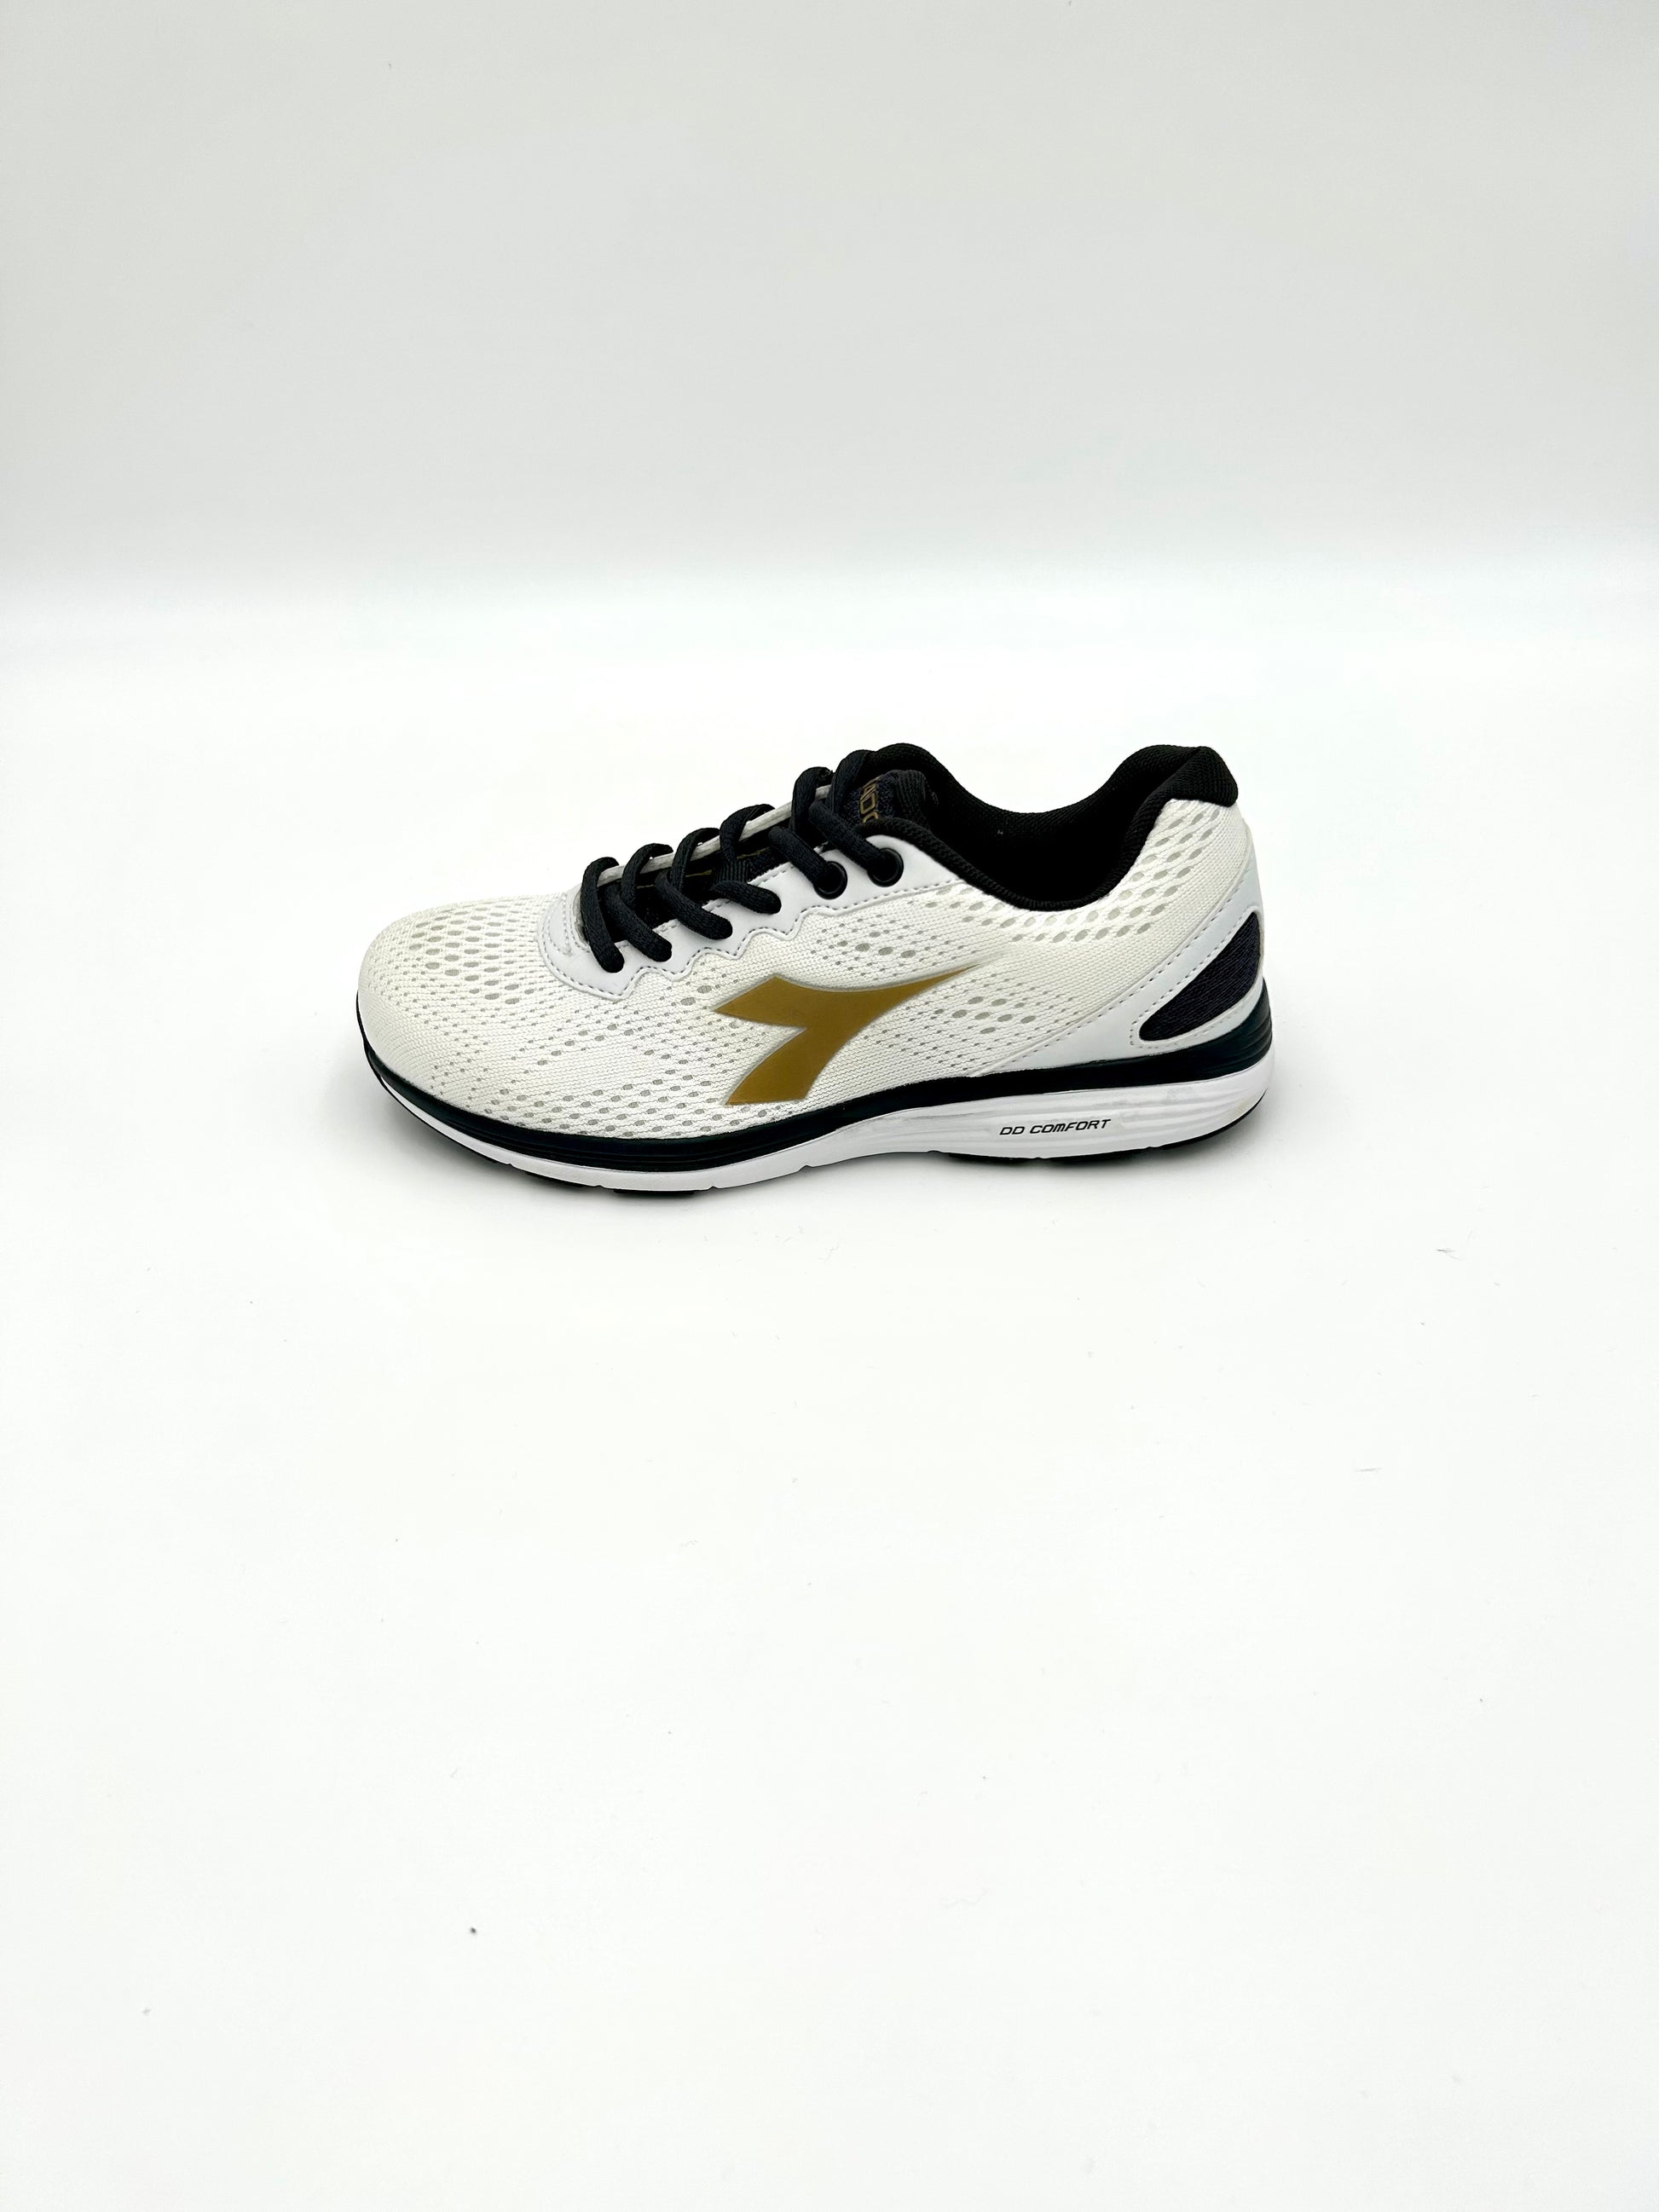 Diadora Sneakers Swan 2 W DD Comfort - white and gold - Diadora